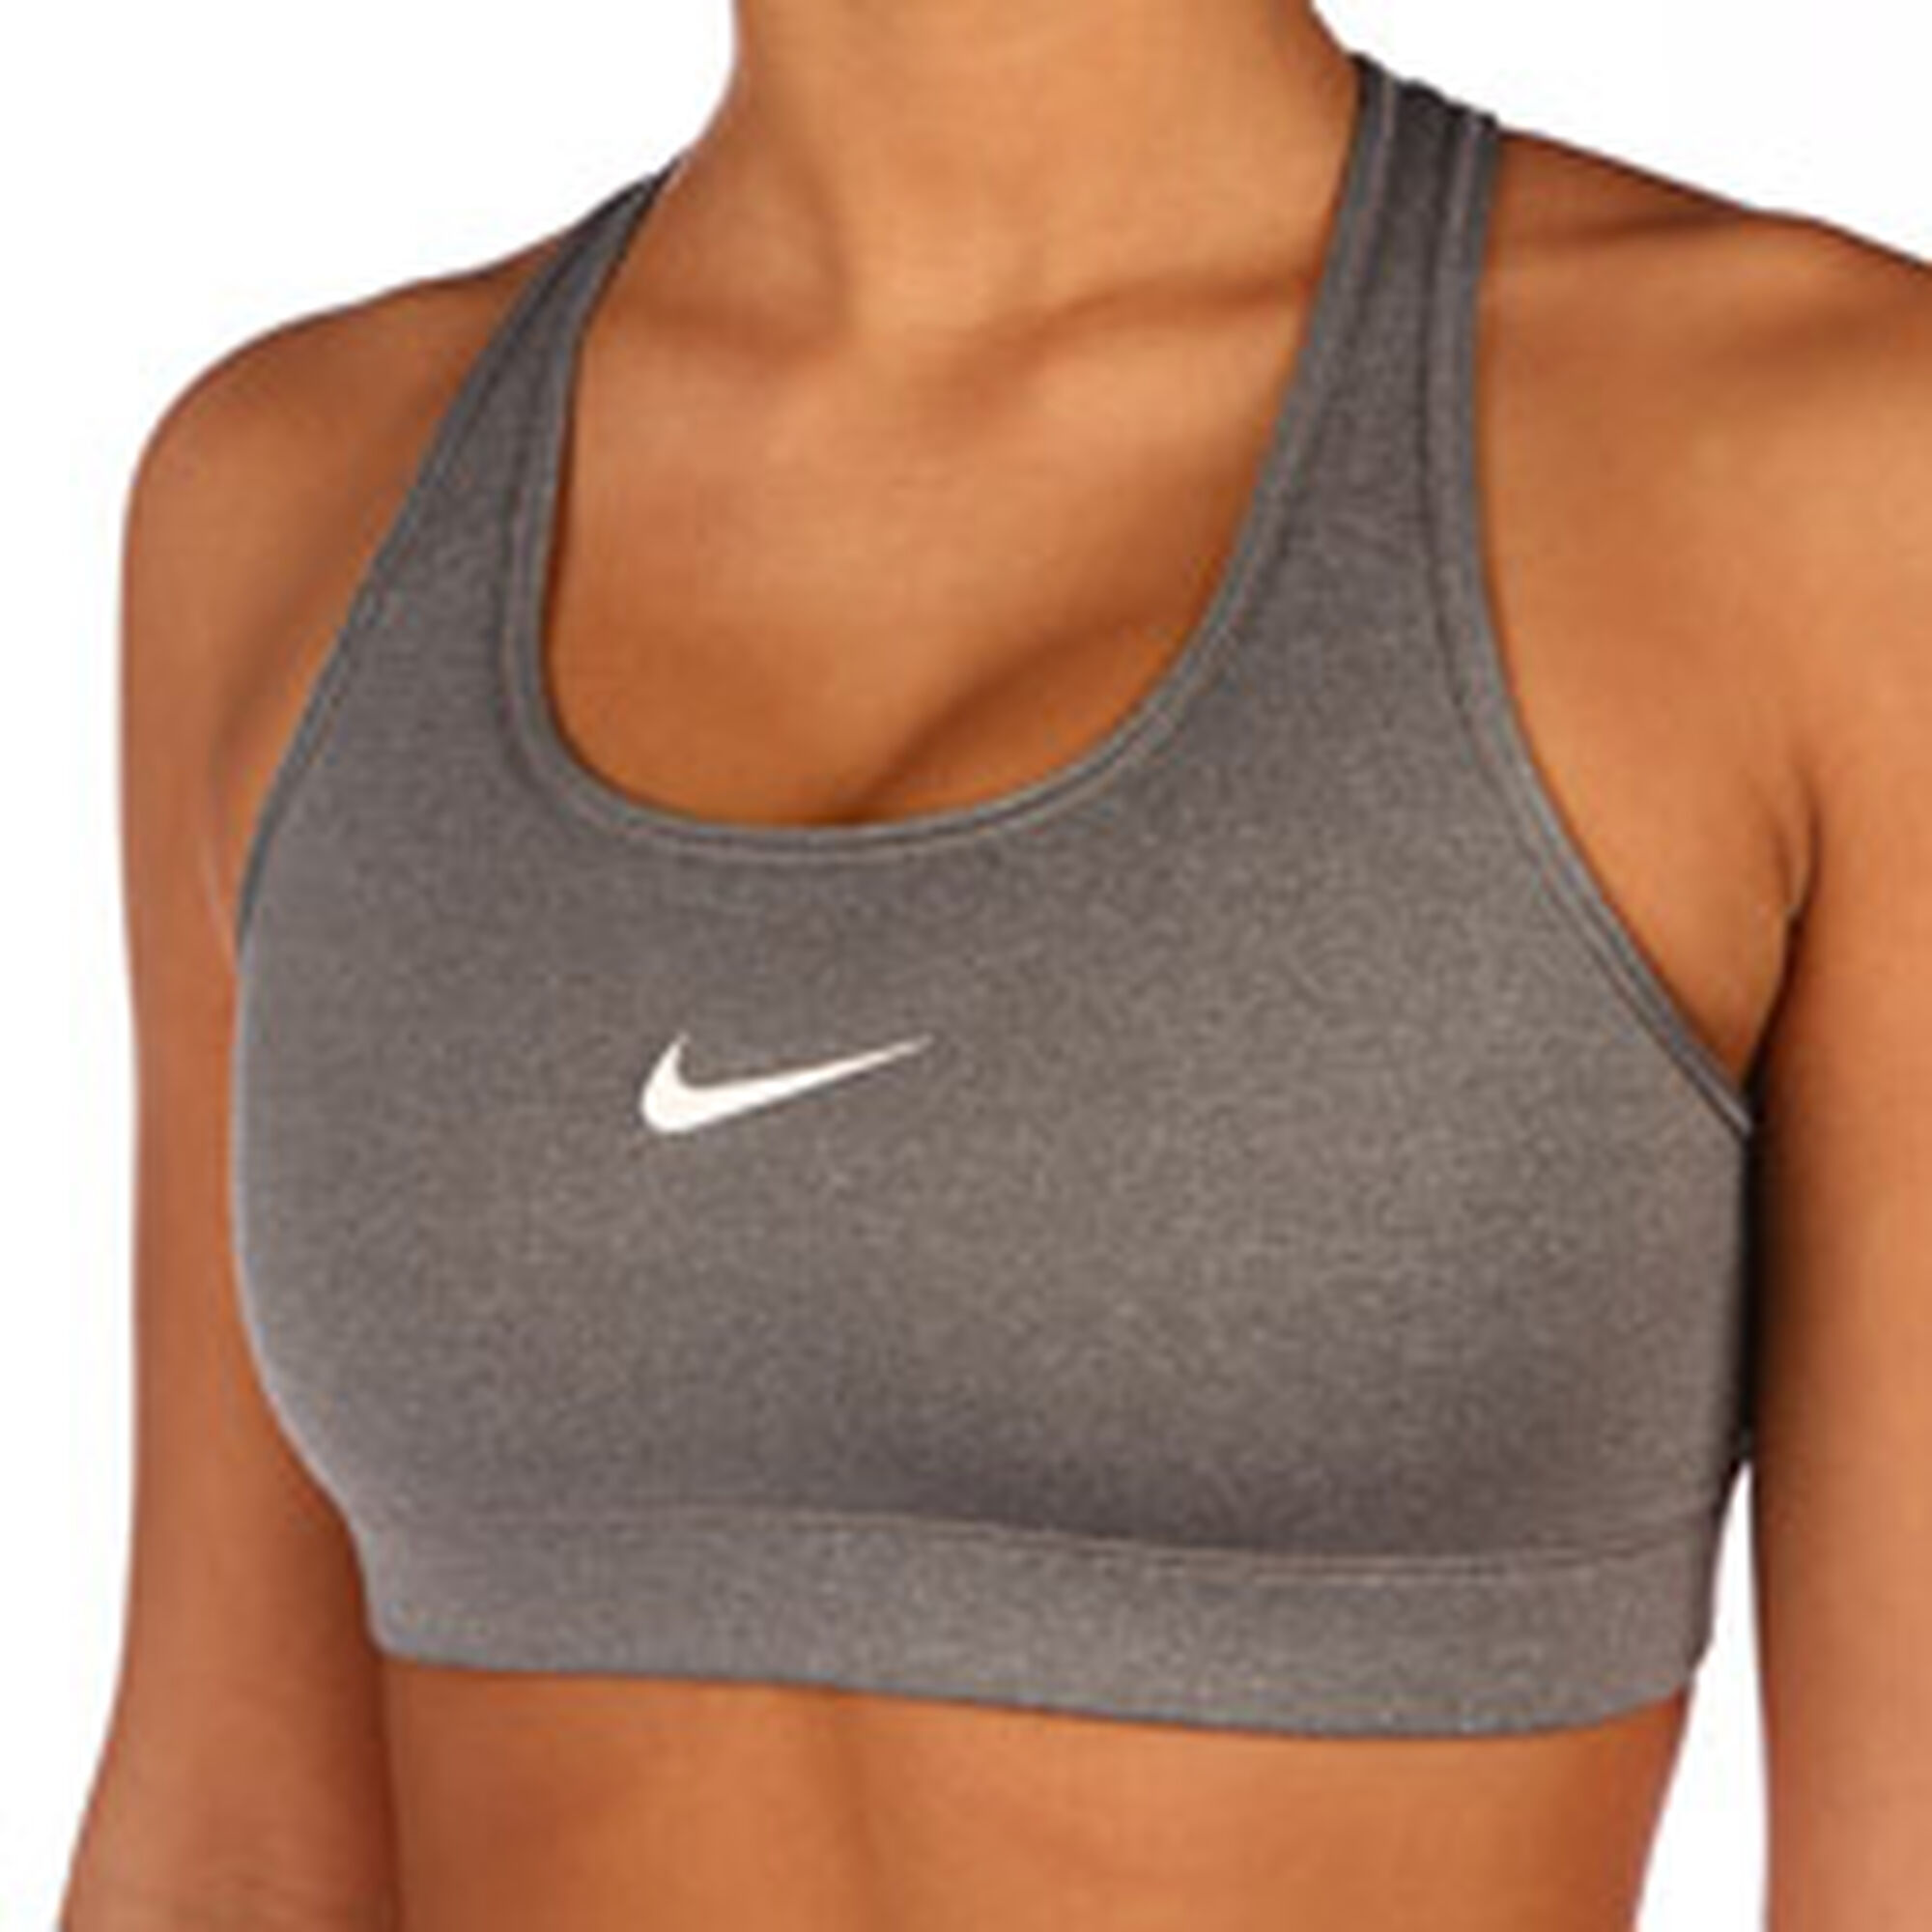 Buy Nike Victory Compression Sports Bras Women Grey online